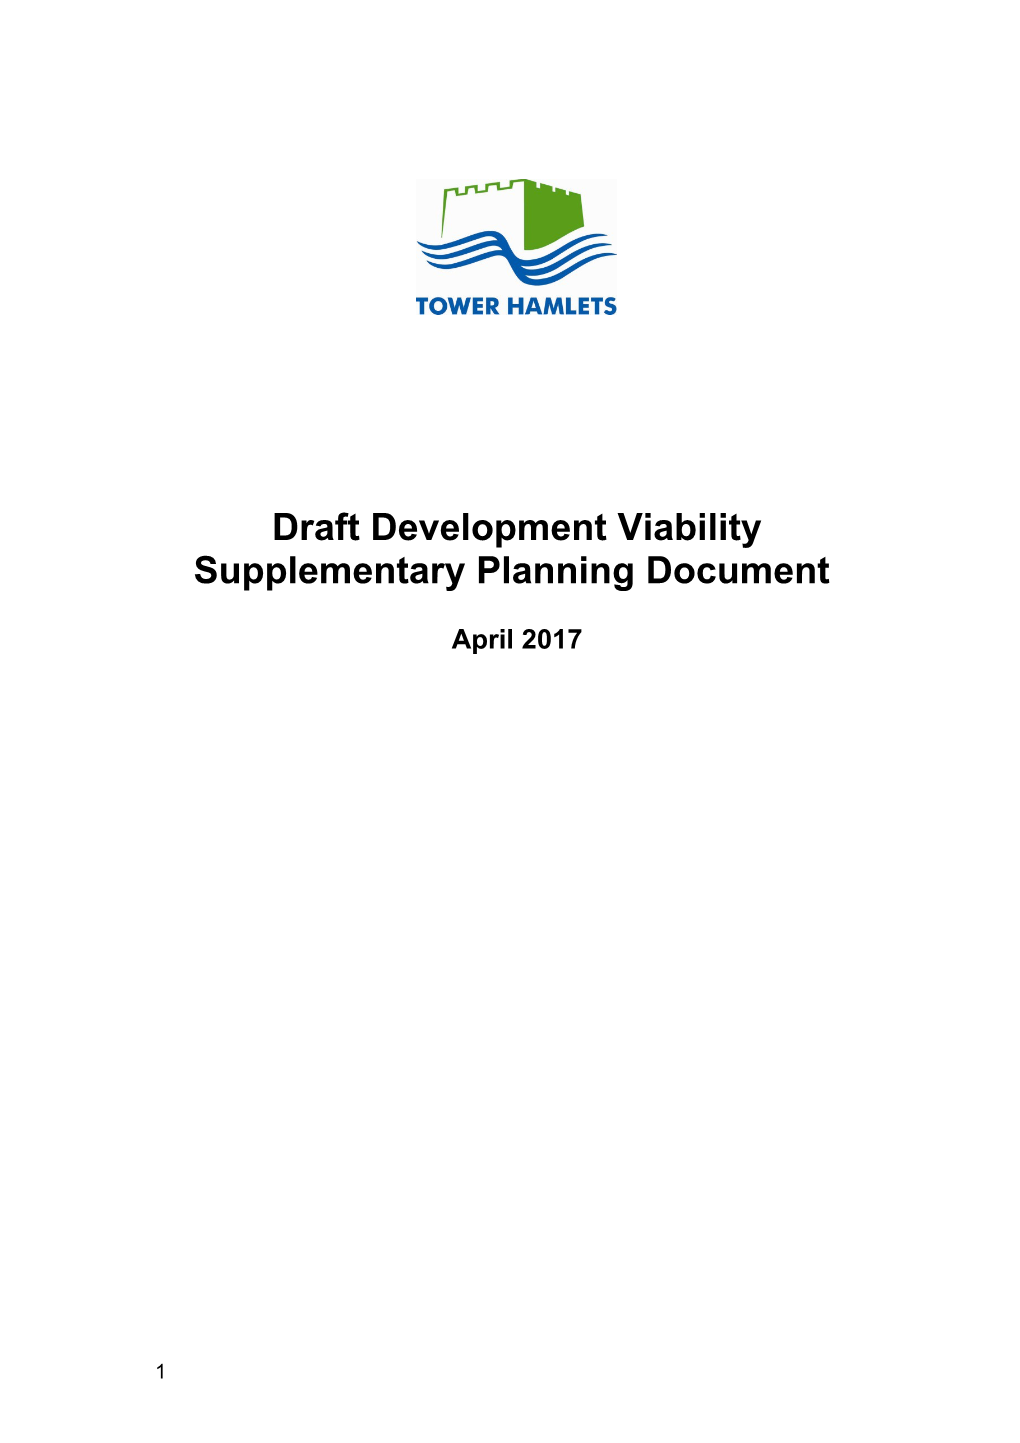 Draft Development Viability Supplementary Planning Document